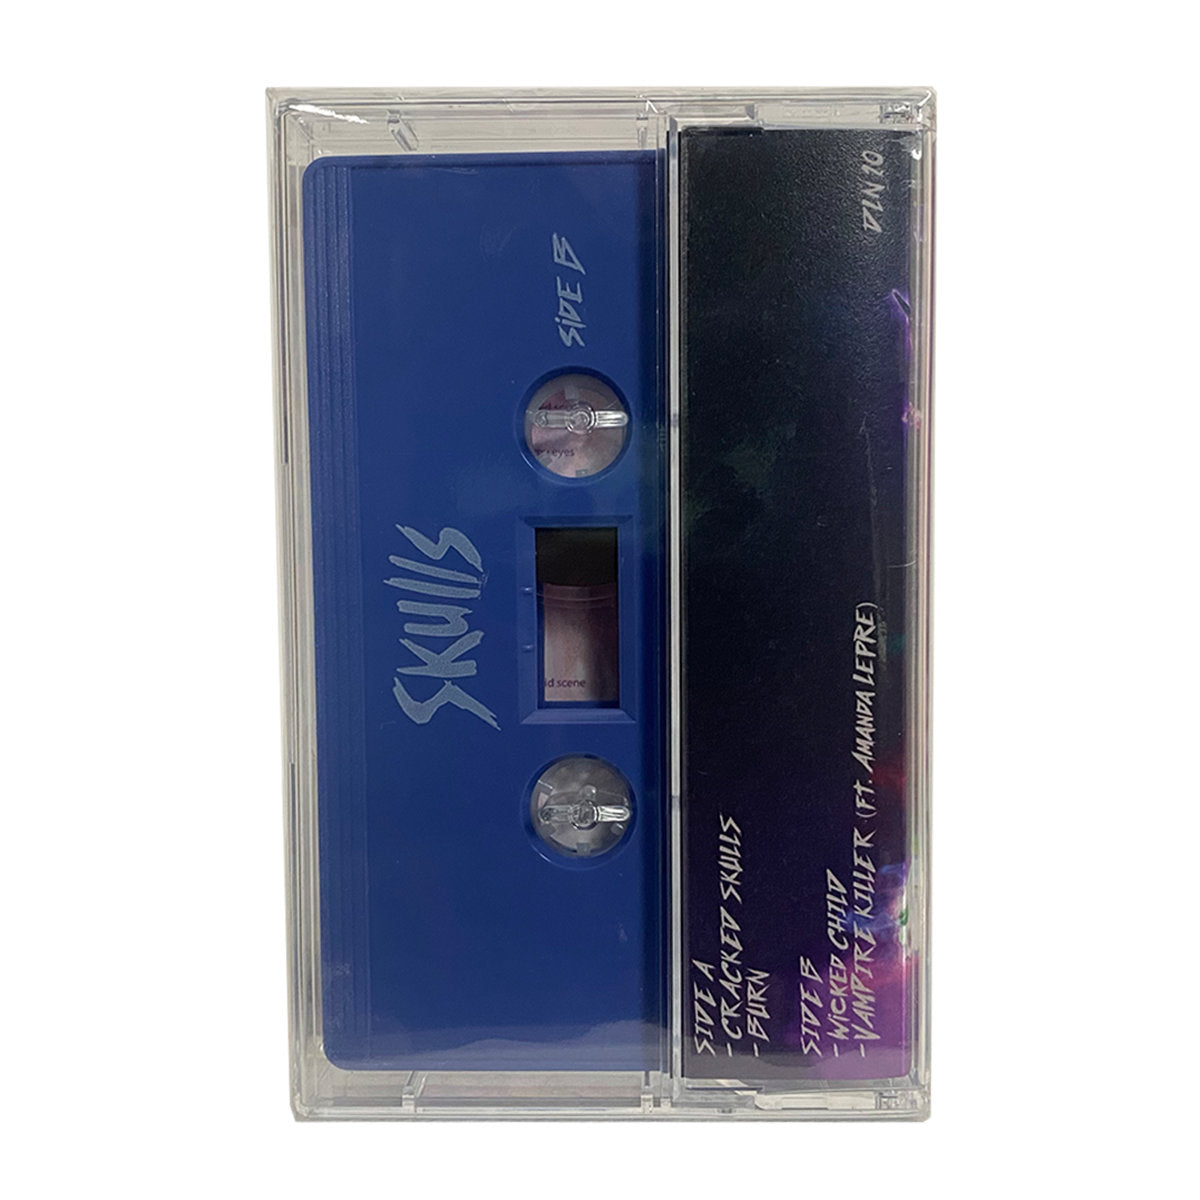 Skulls - Limited Edition Cassette